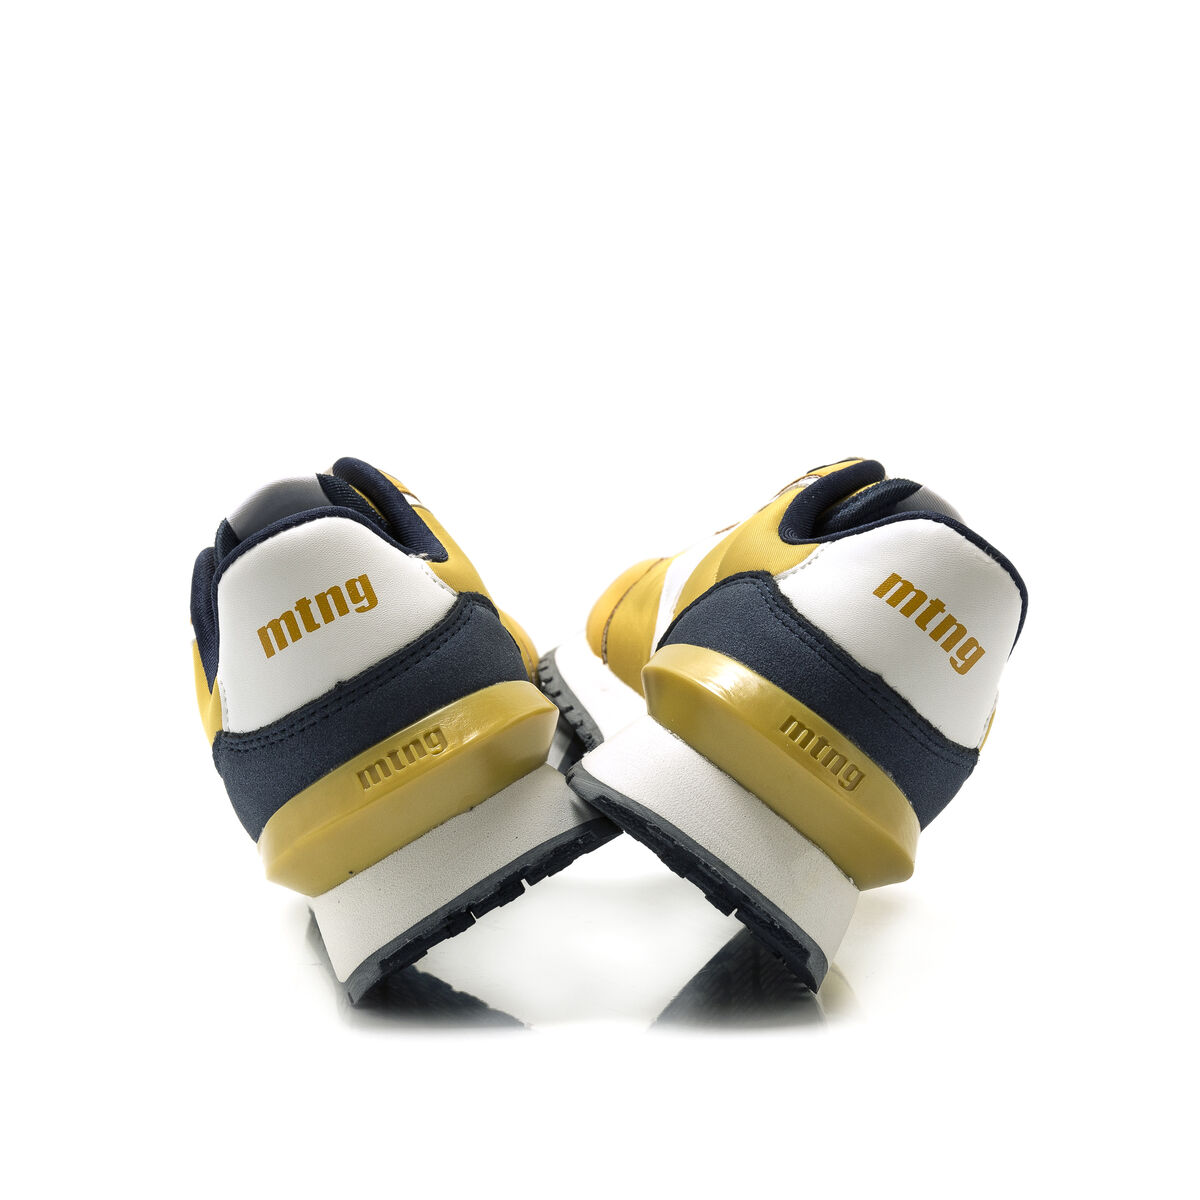 Zapatillas de Nino modelo JOGGO de MTNG image number 3